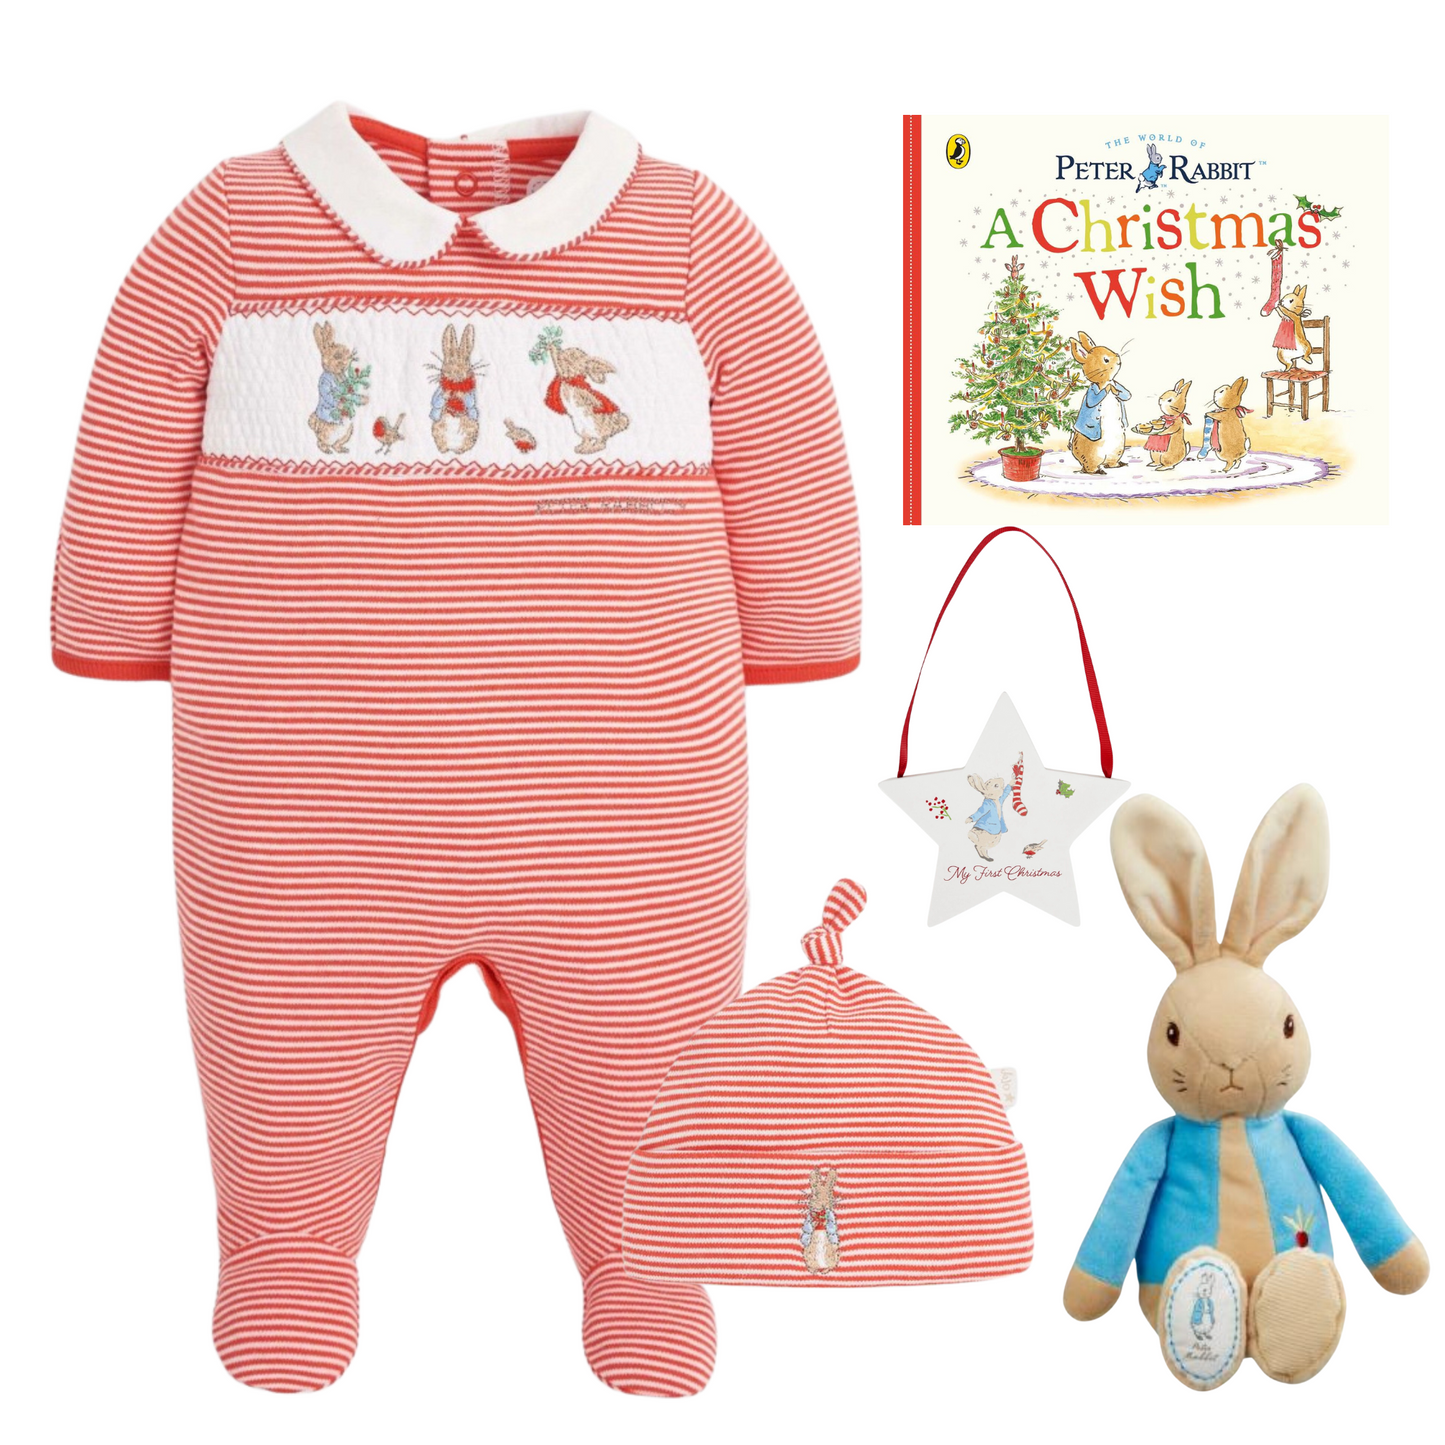 Peter Rabbit My First Christmas Gift Set